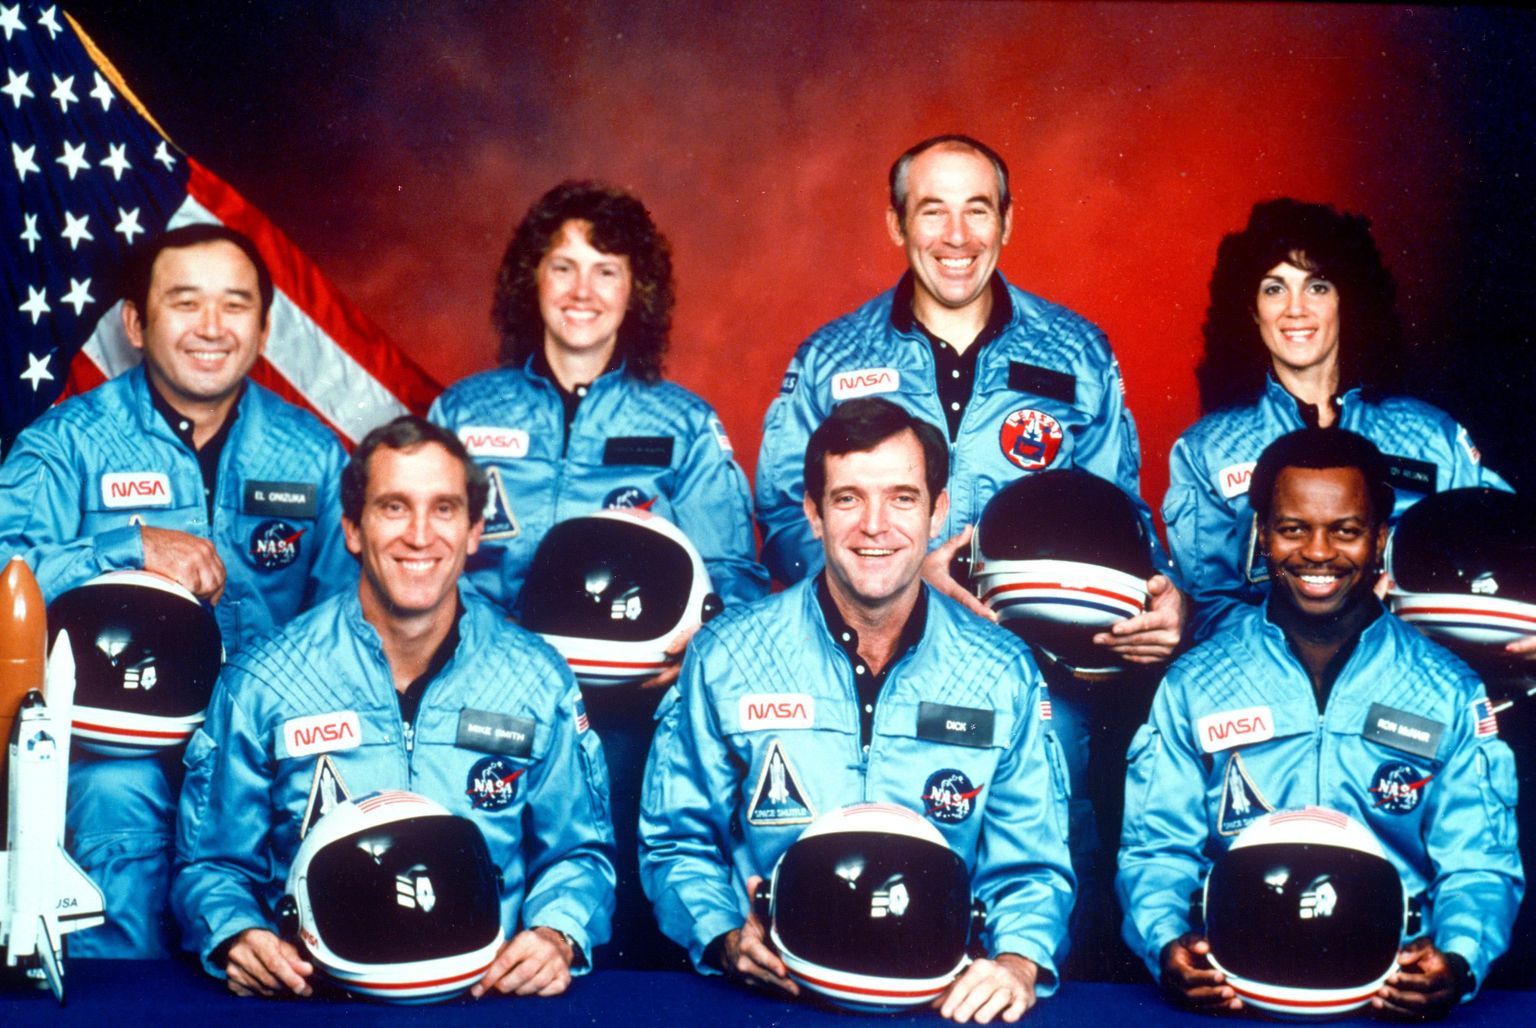 Challengeri meeskond  alates vasakult ülevat: Ellison Onizuka, Mike Smith, Christa McAuliffe, Dick Scobee, Greg Jarvis, Ron McNair ja Judith Resnik